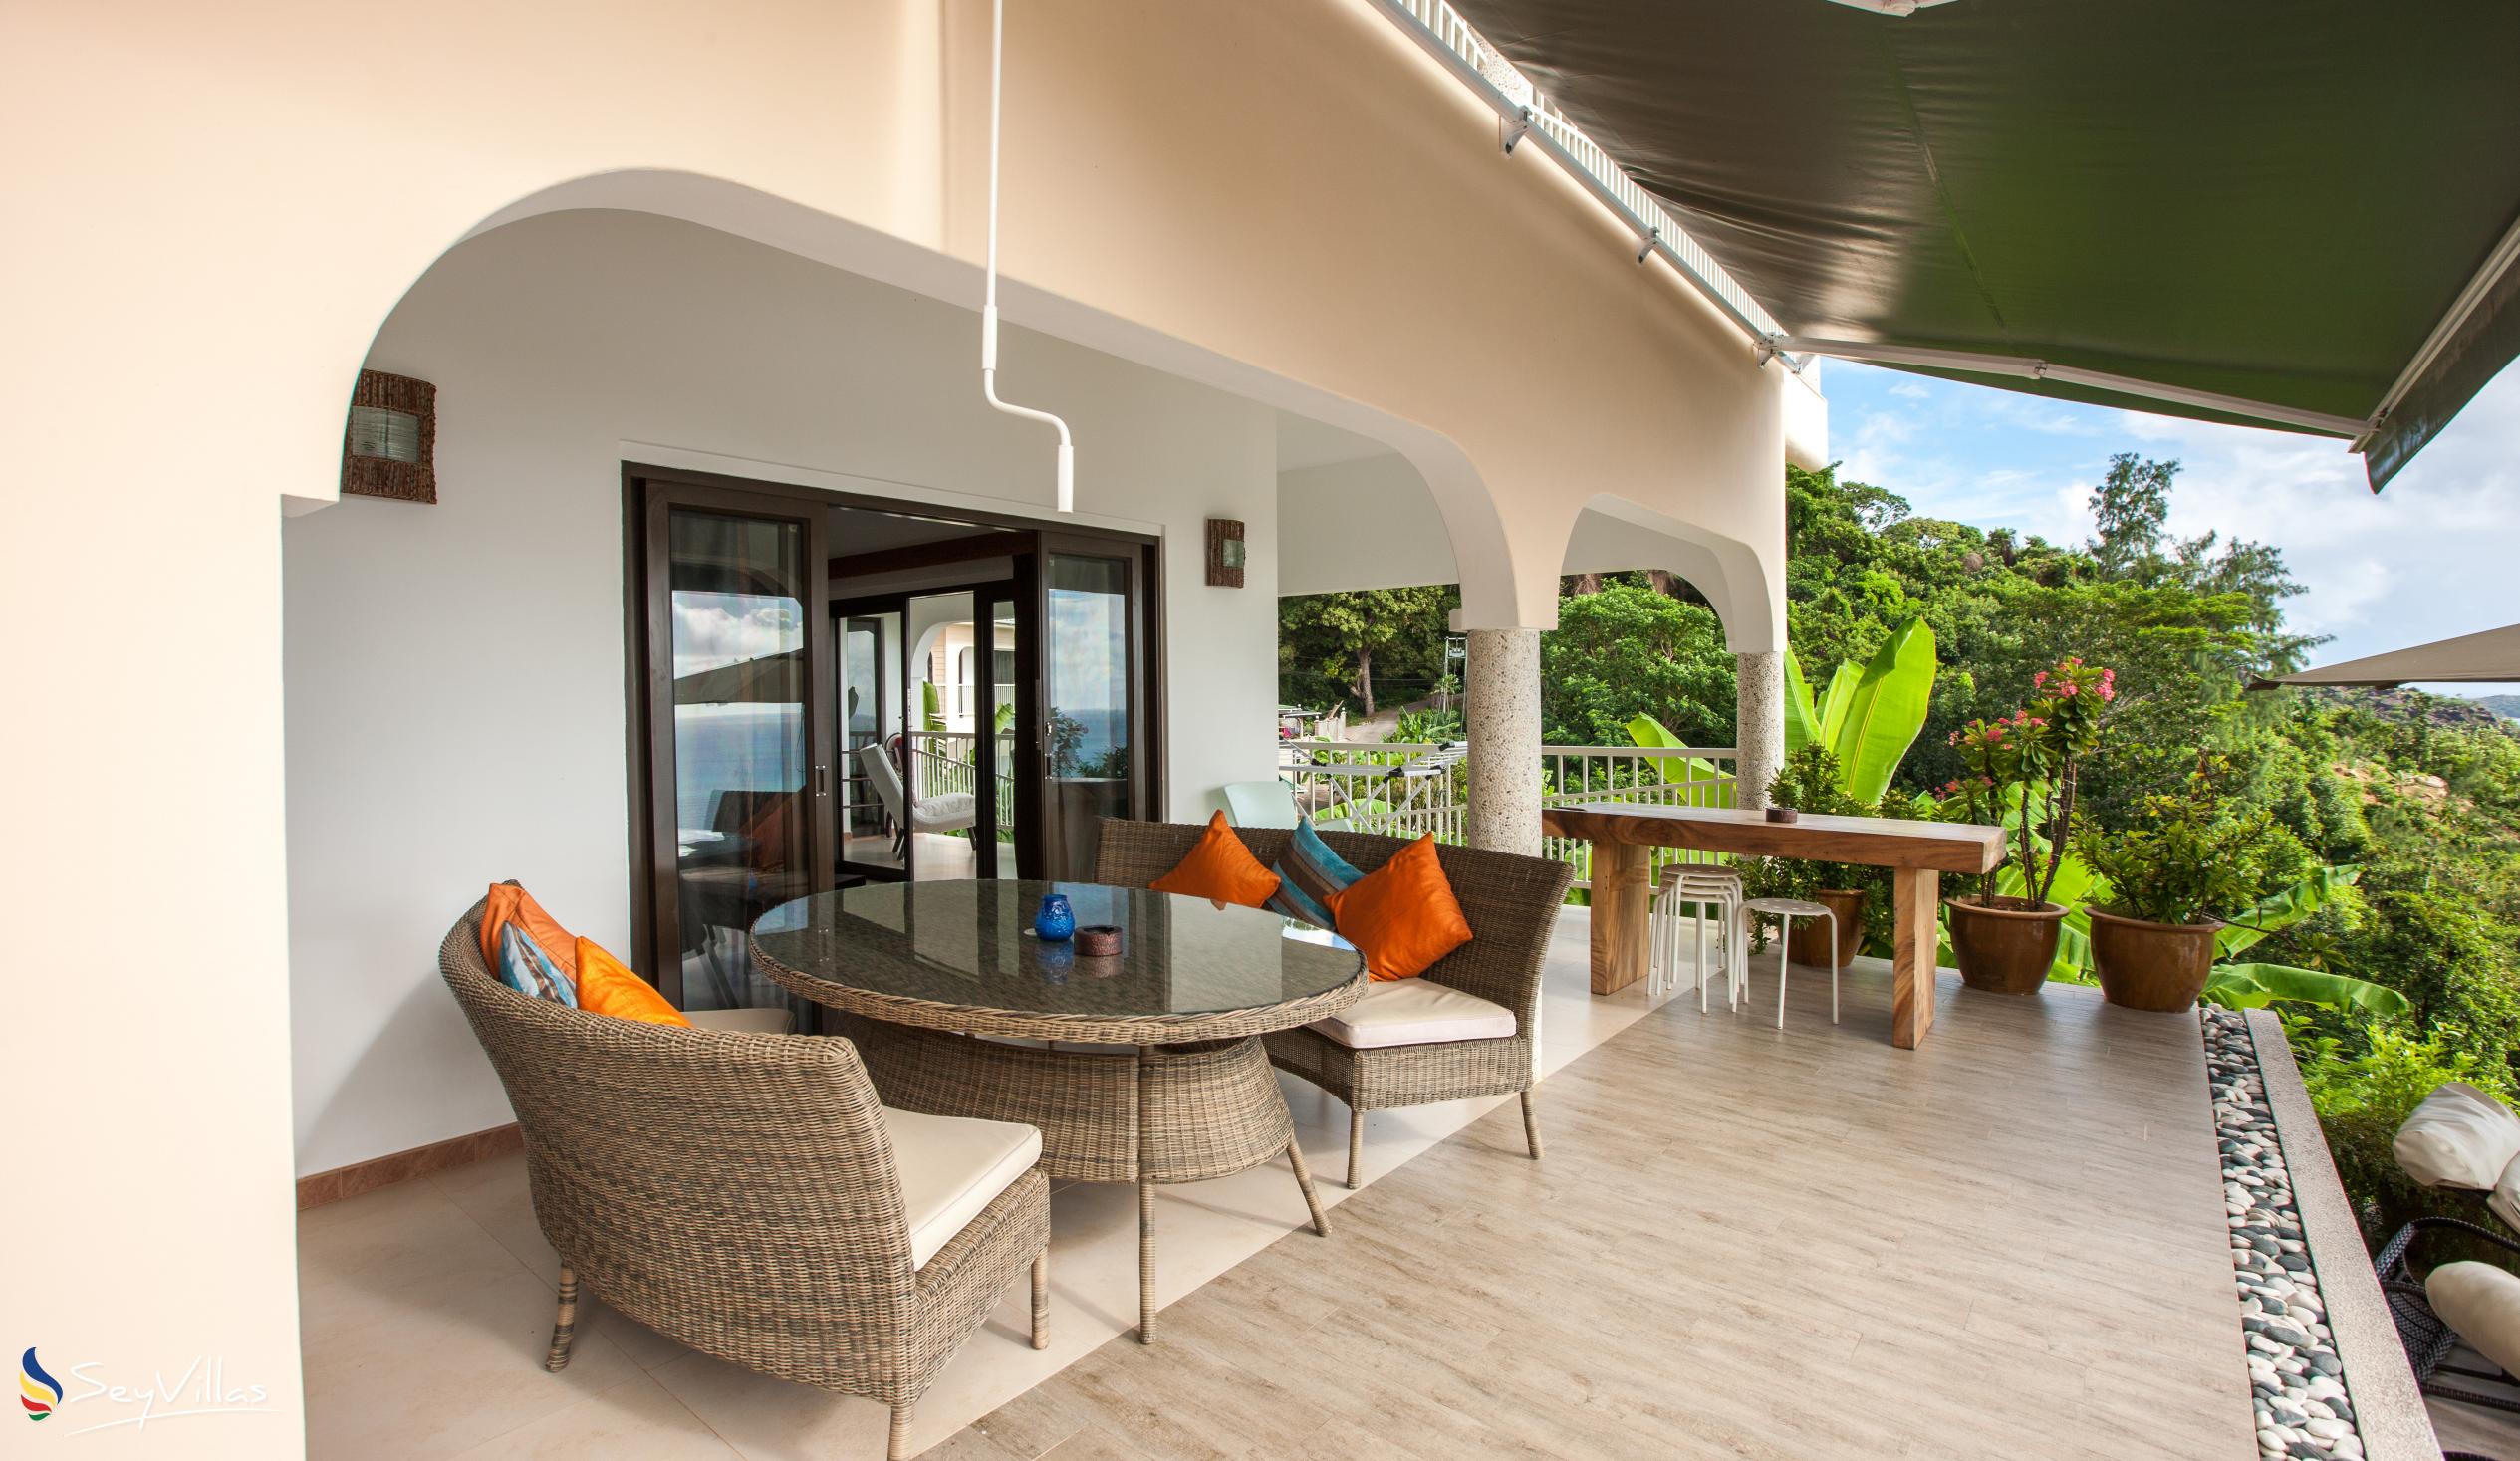 Foto 56: Le Duc de Praslin Hillside Villas - Villa 270° - Praslin (Seychellen)